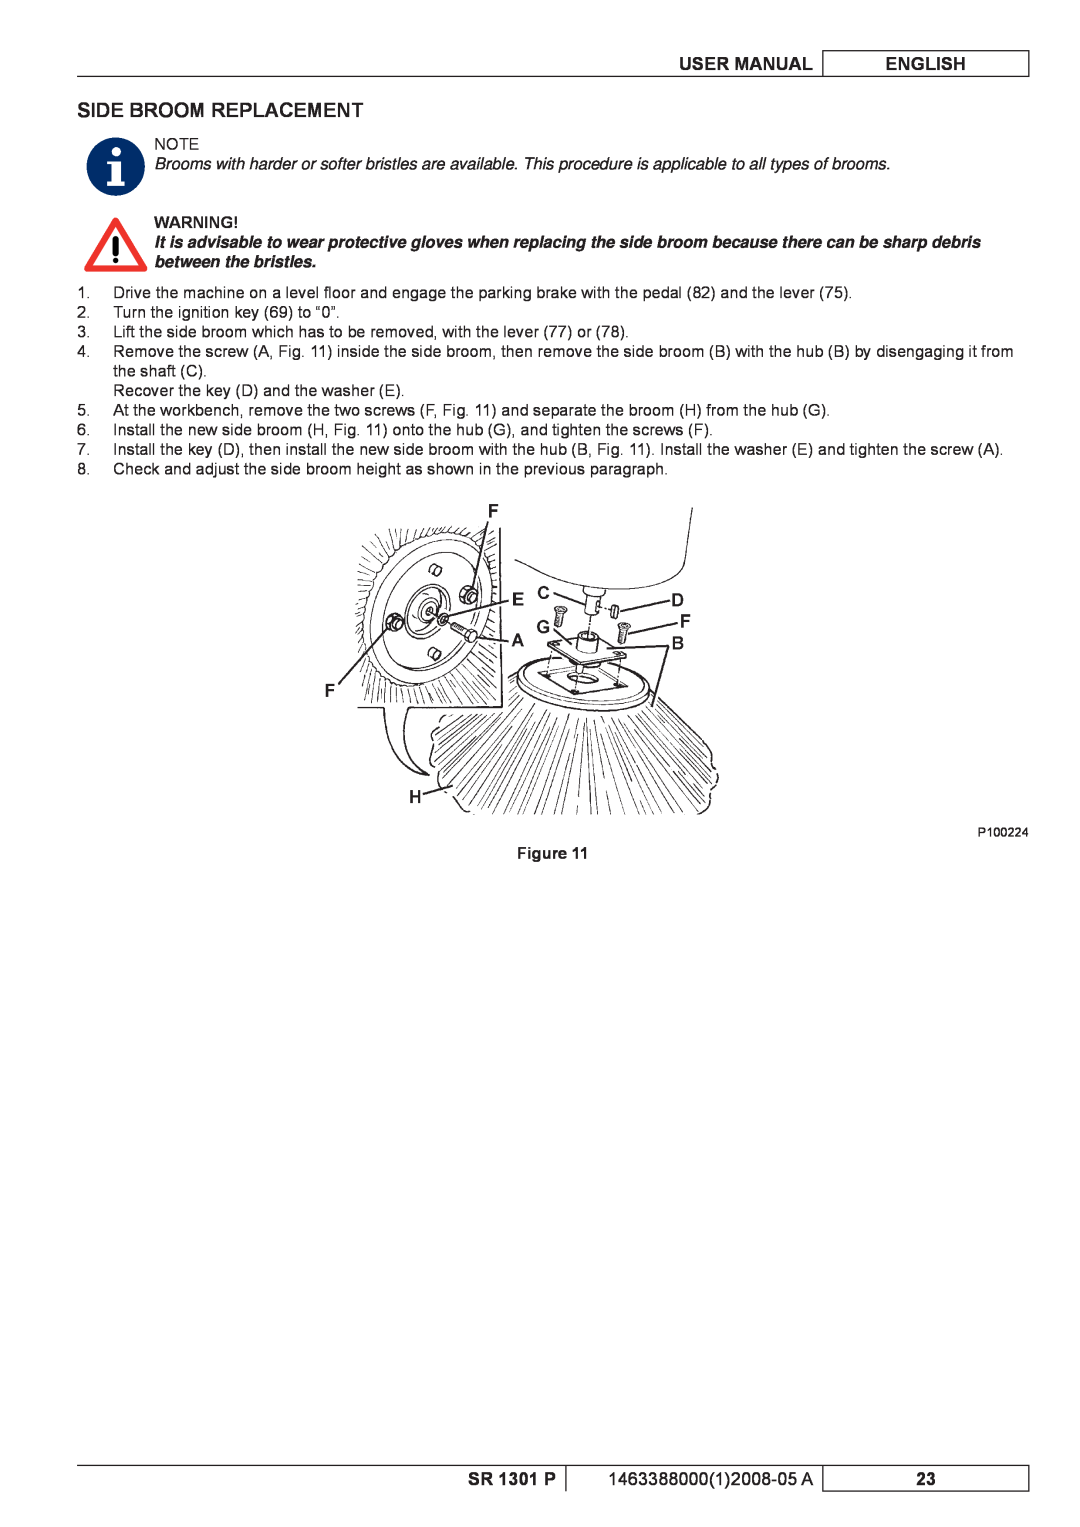 Nilfisk-ALTO SR 1301 P manuel dutilisation Side Broom Replacement, User Manual, English, 146338800012008-05 A 